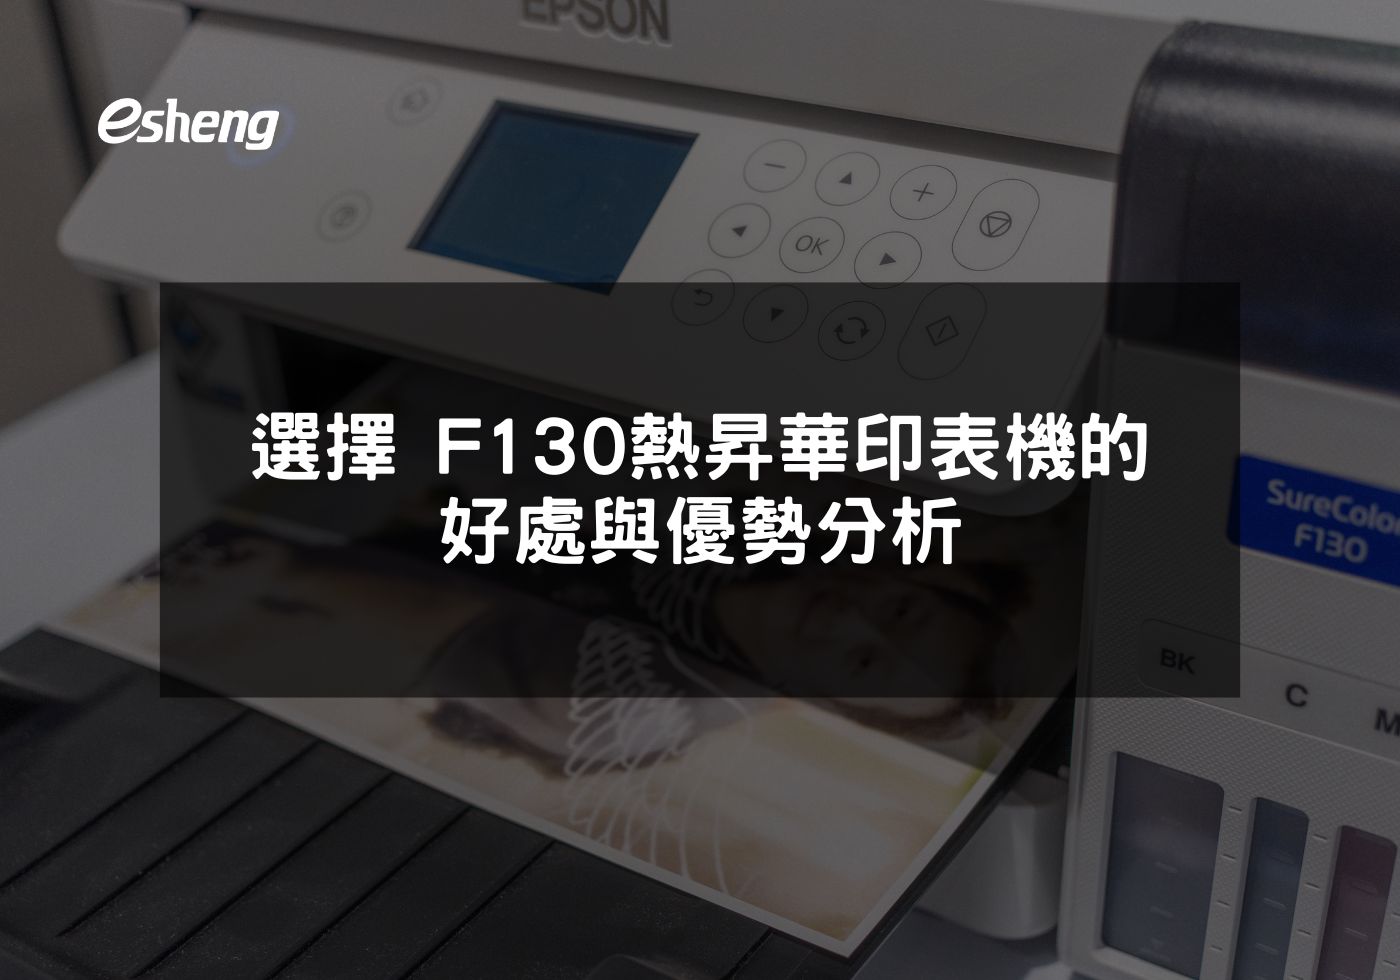 EPSON F130熱昇華印表機多元應用與環保特性